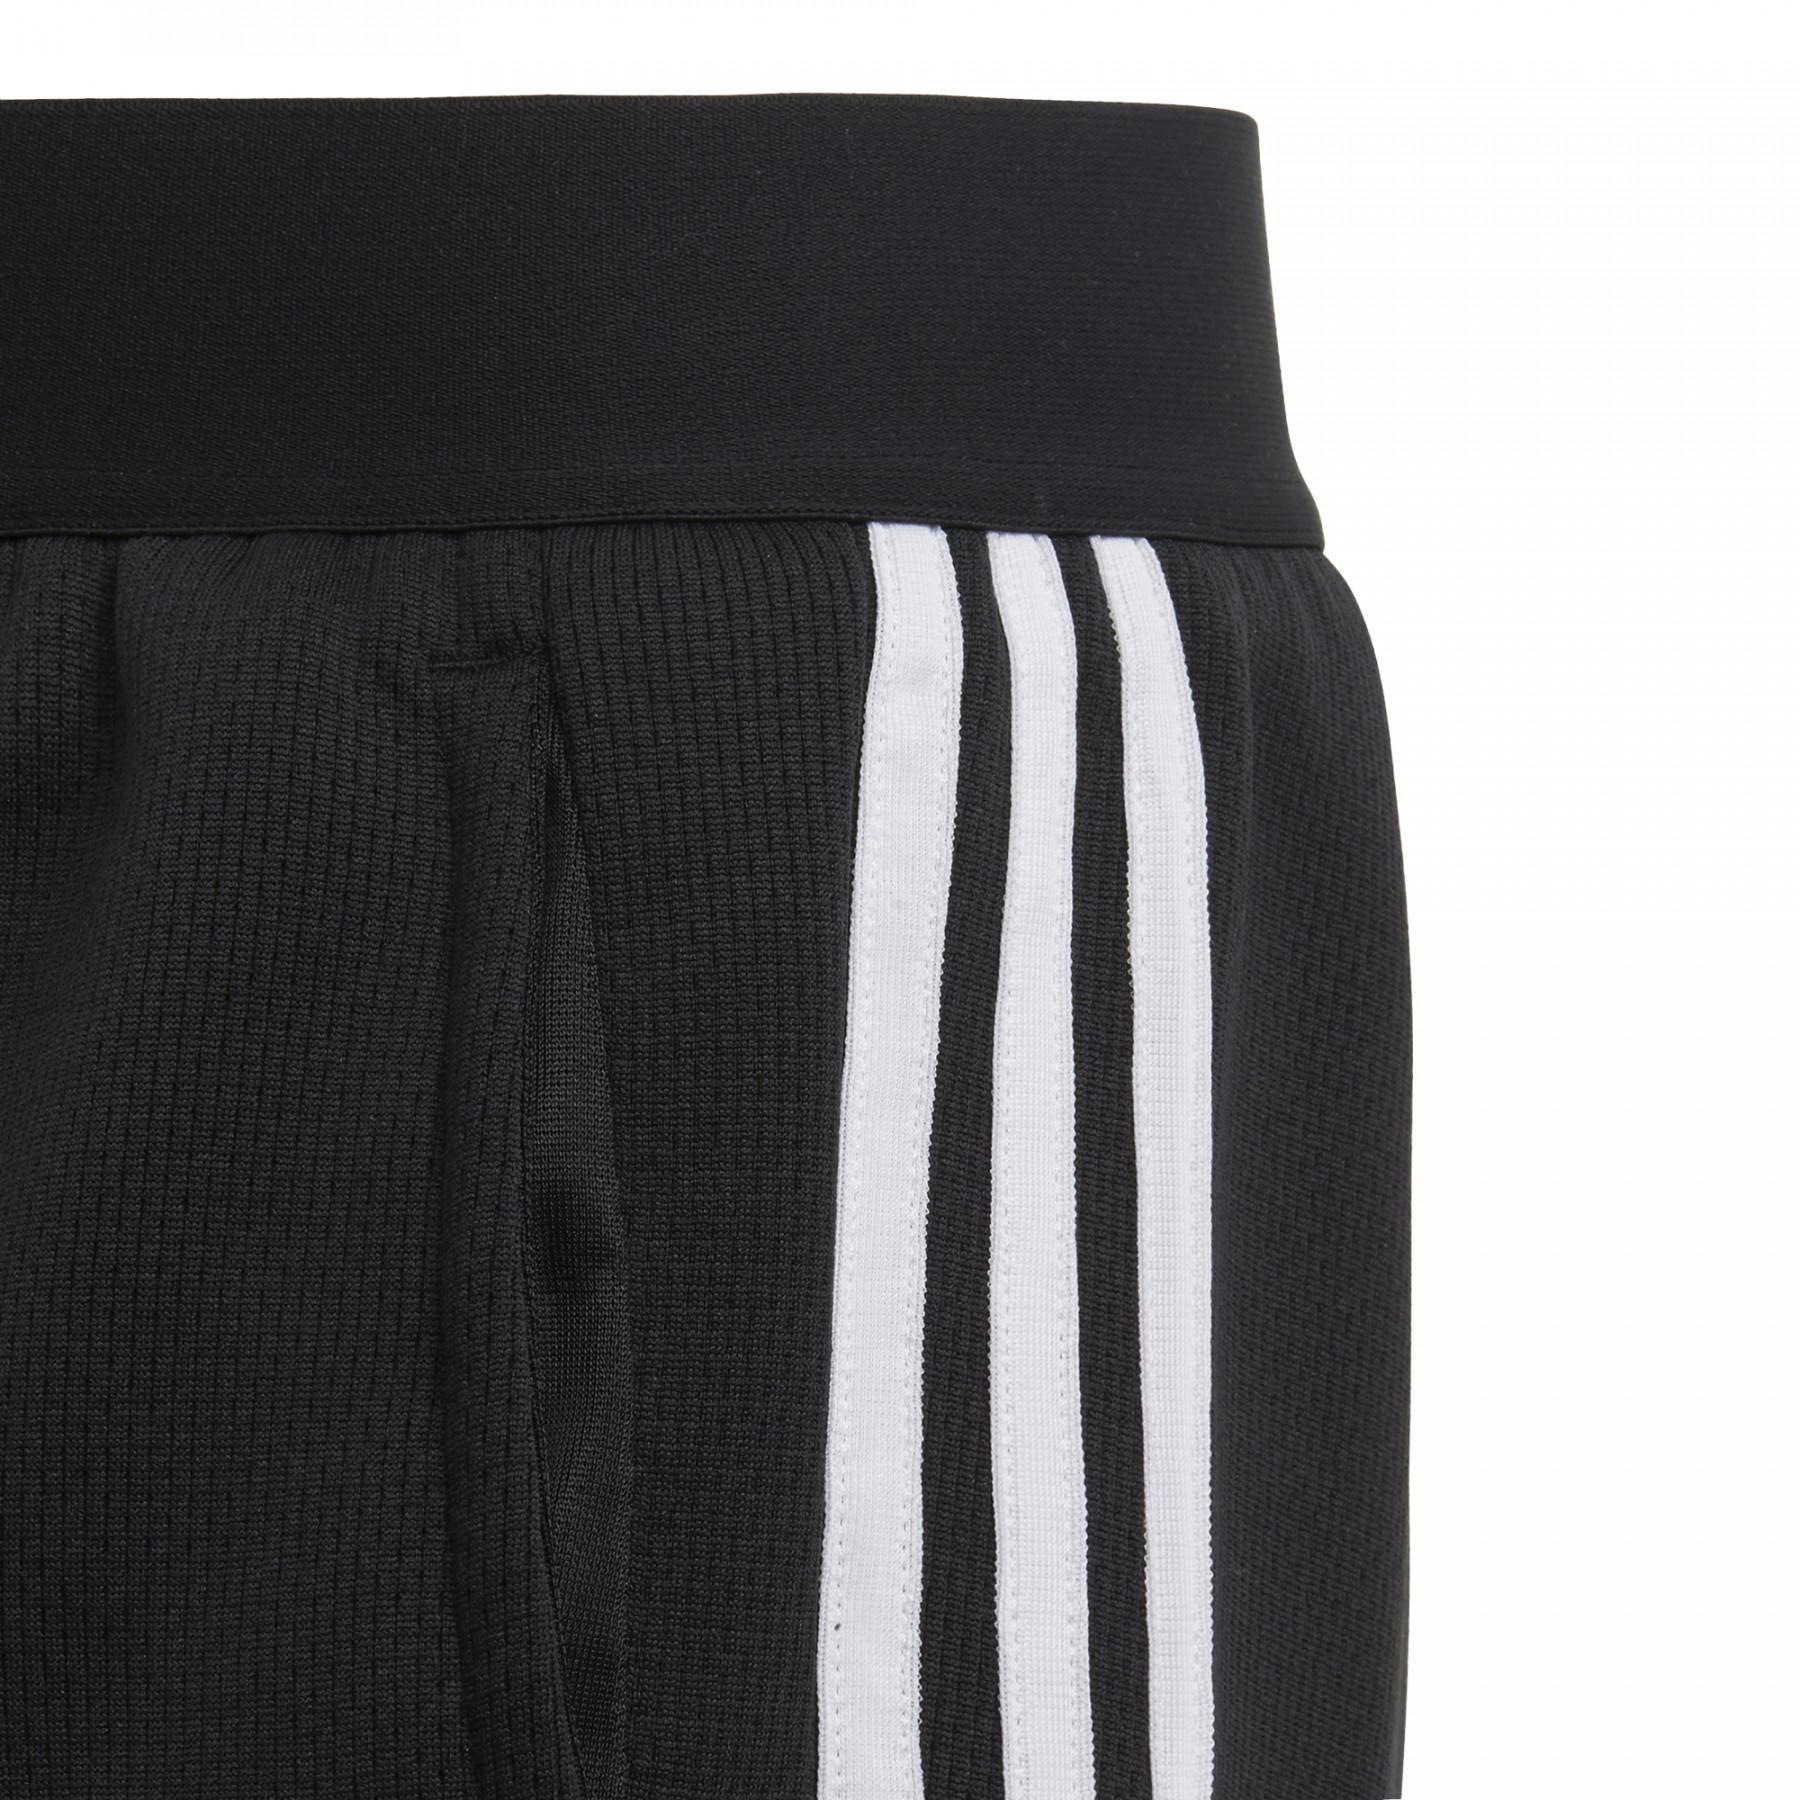 Kinder shorts adidas Preadator 3-Stripes